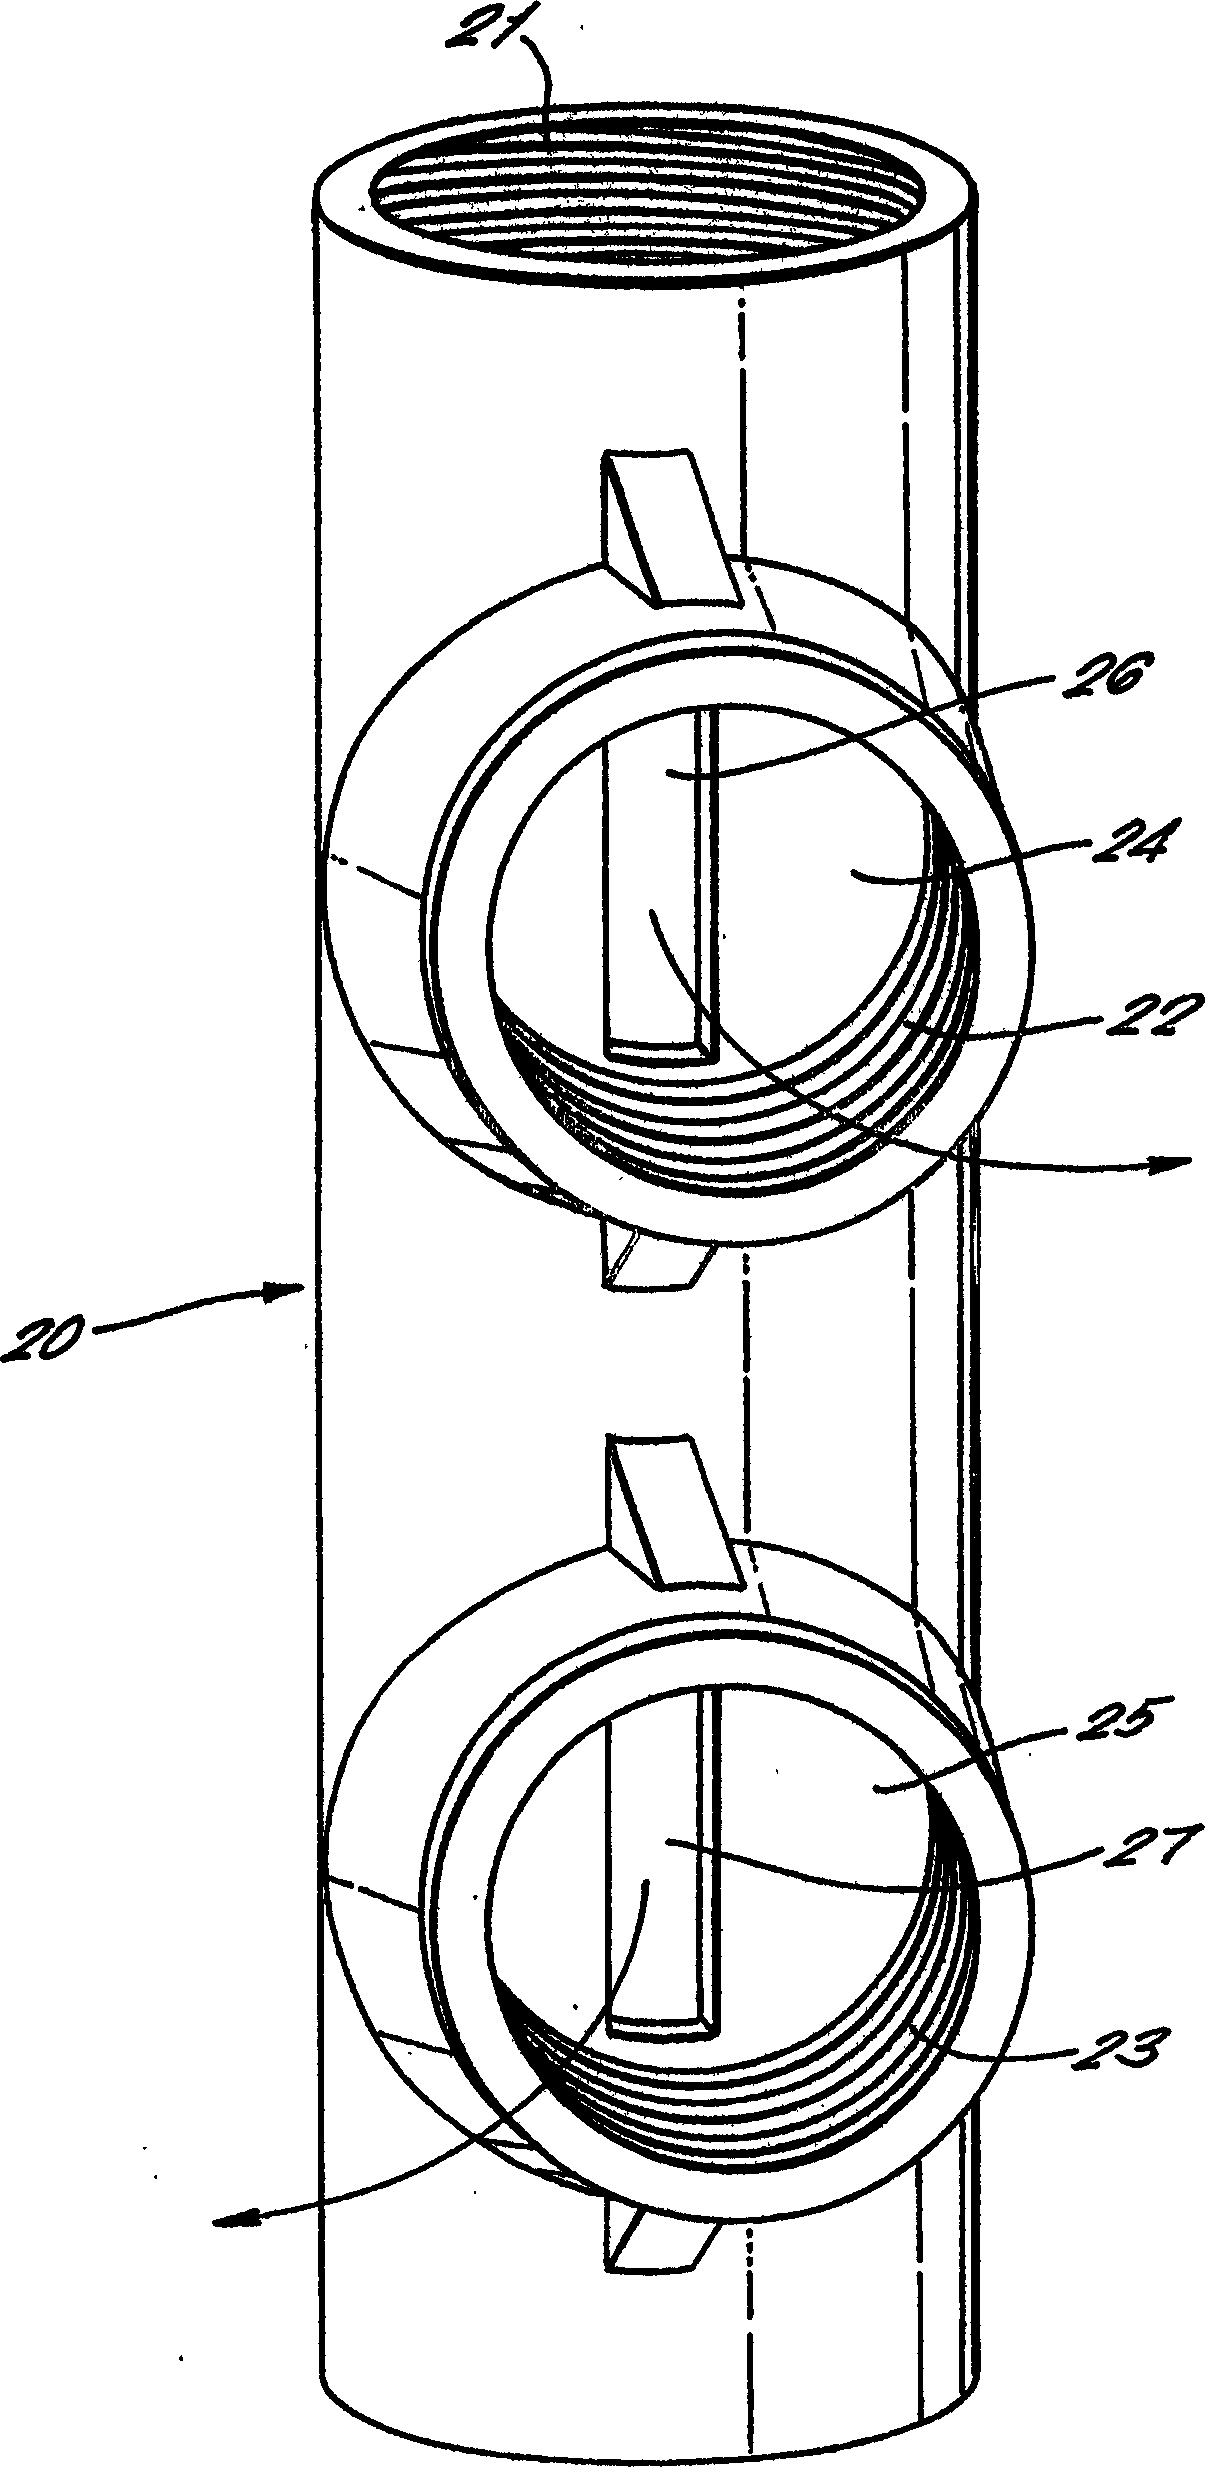 A splitter valve